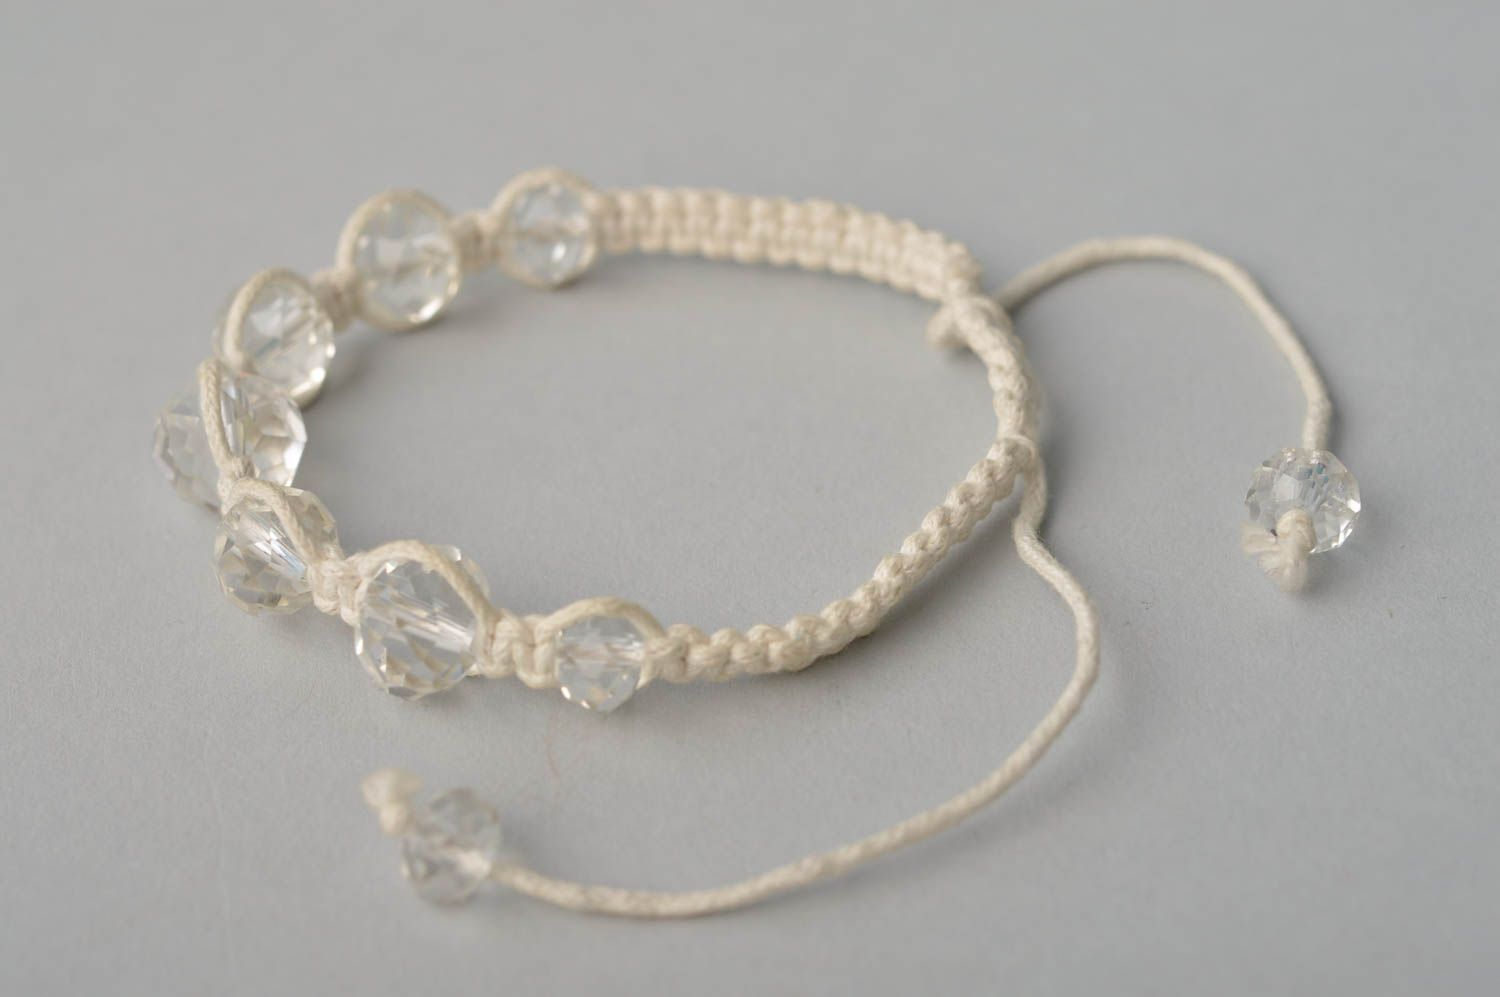 Handmade bracelet bead jewelry cord bracelet designer accessories gifts for her photo 4